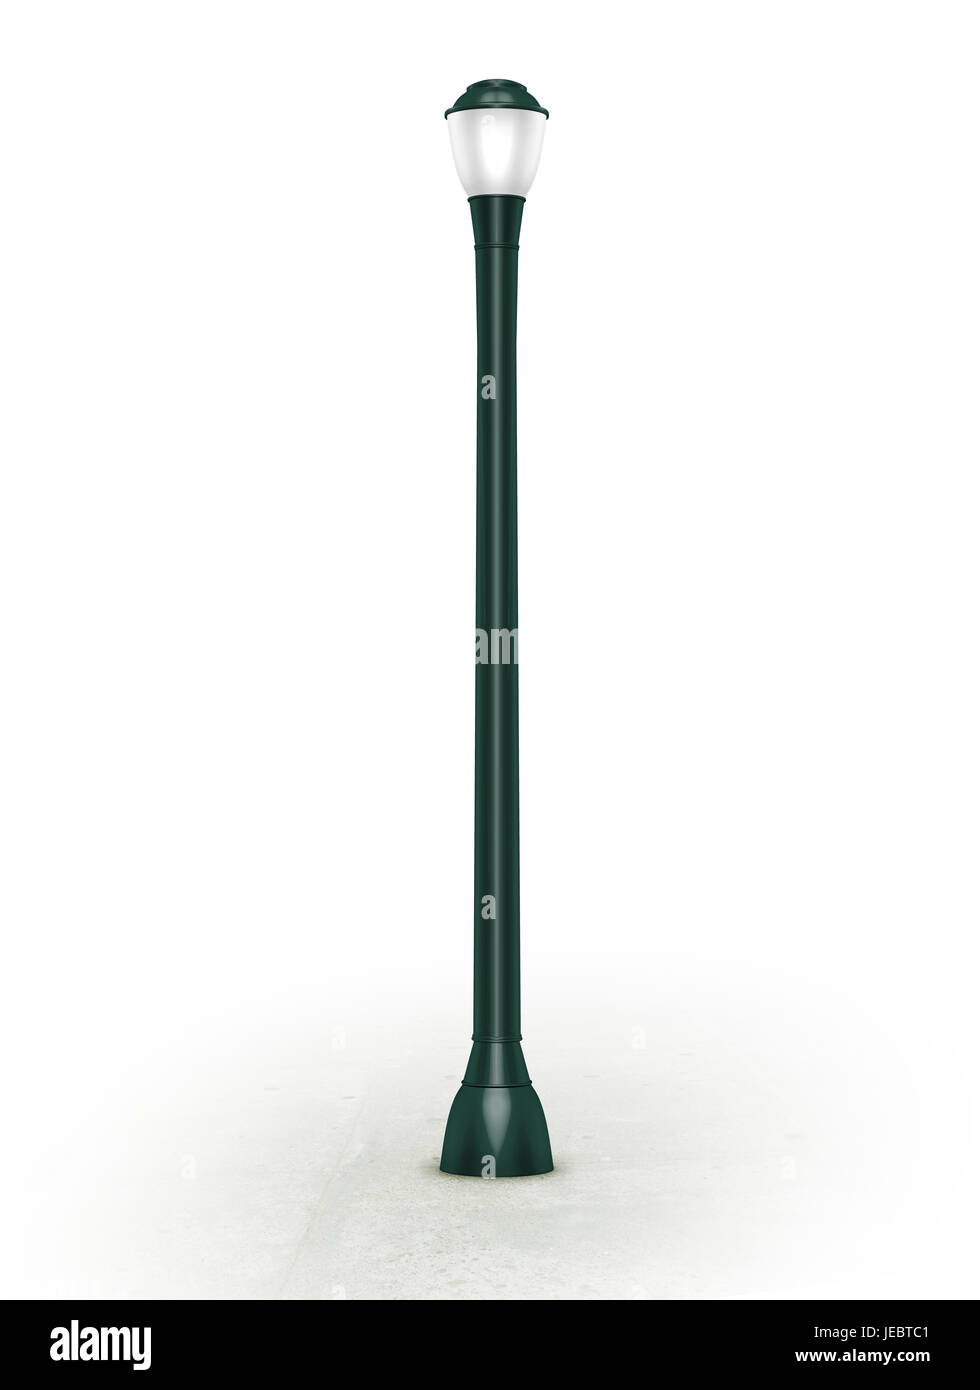 green lamppost illustration on white background eye level view Stock Photo